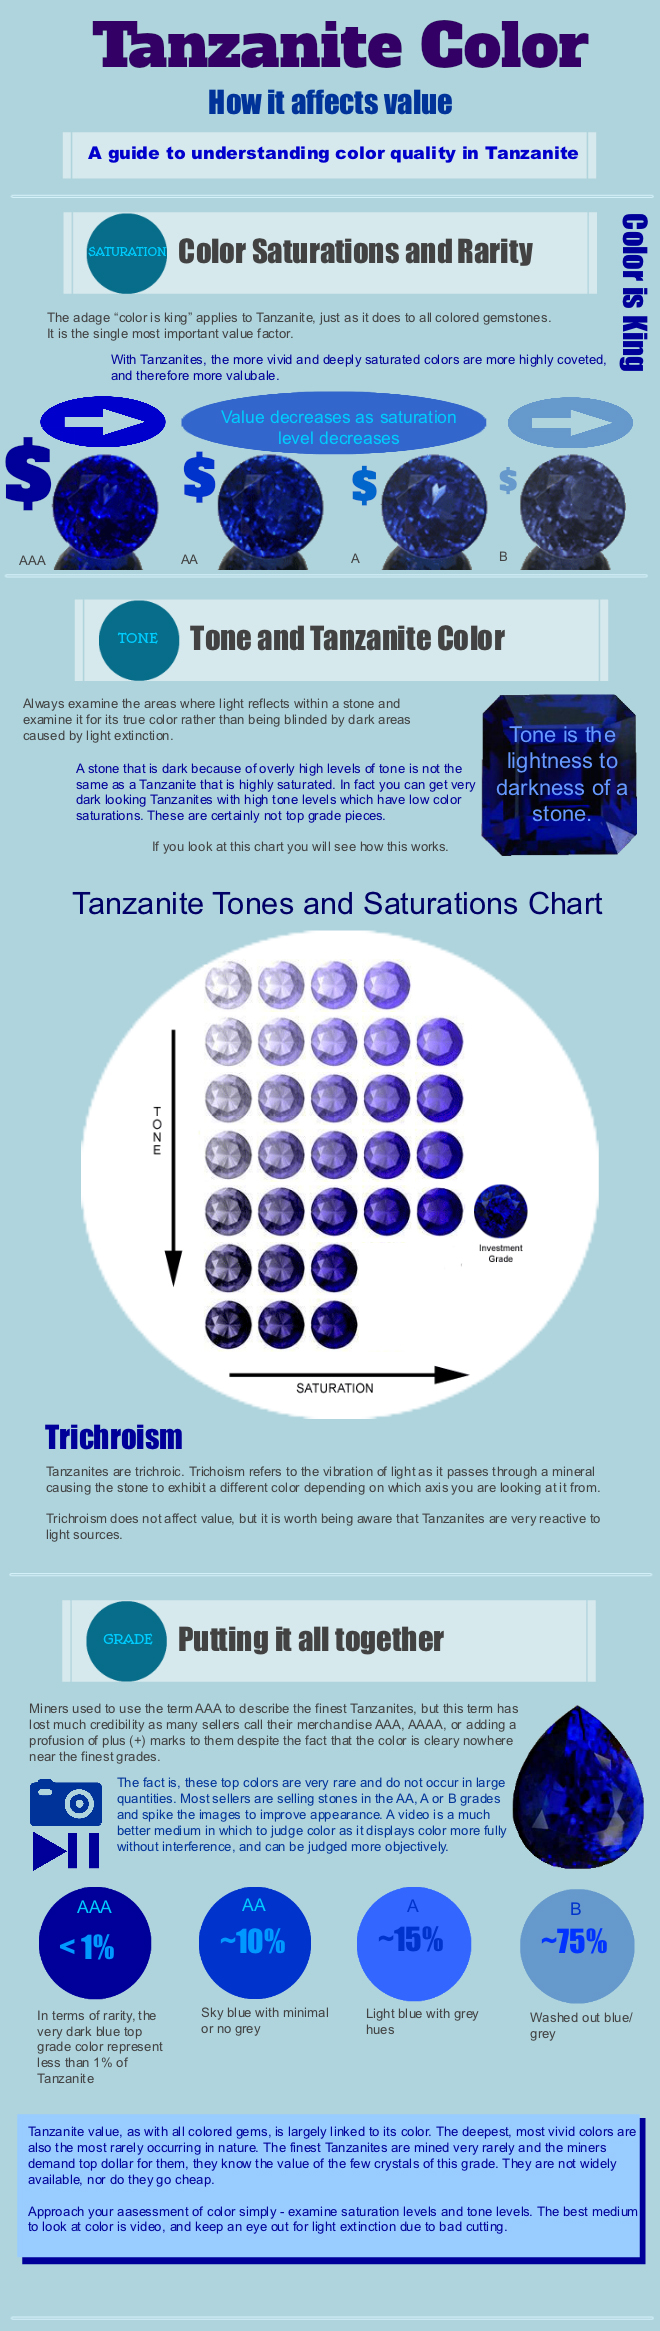 FREE Infographic Tanzanite Color.jpg